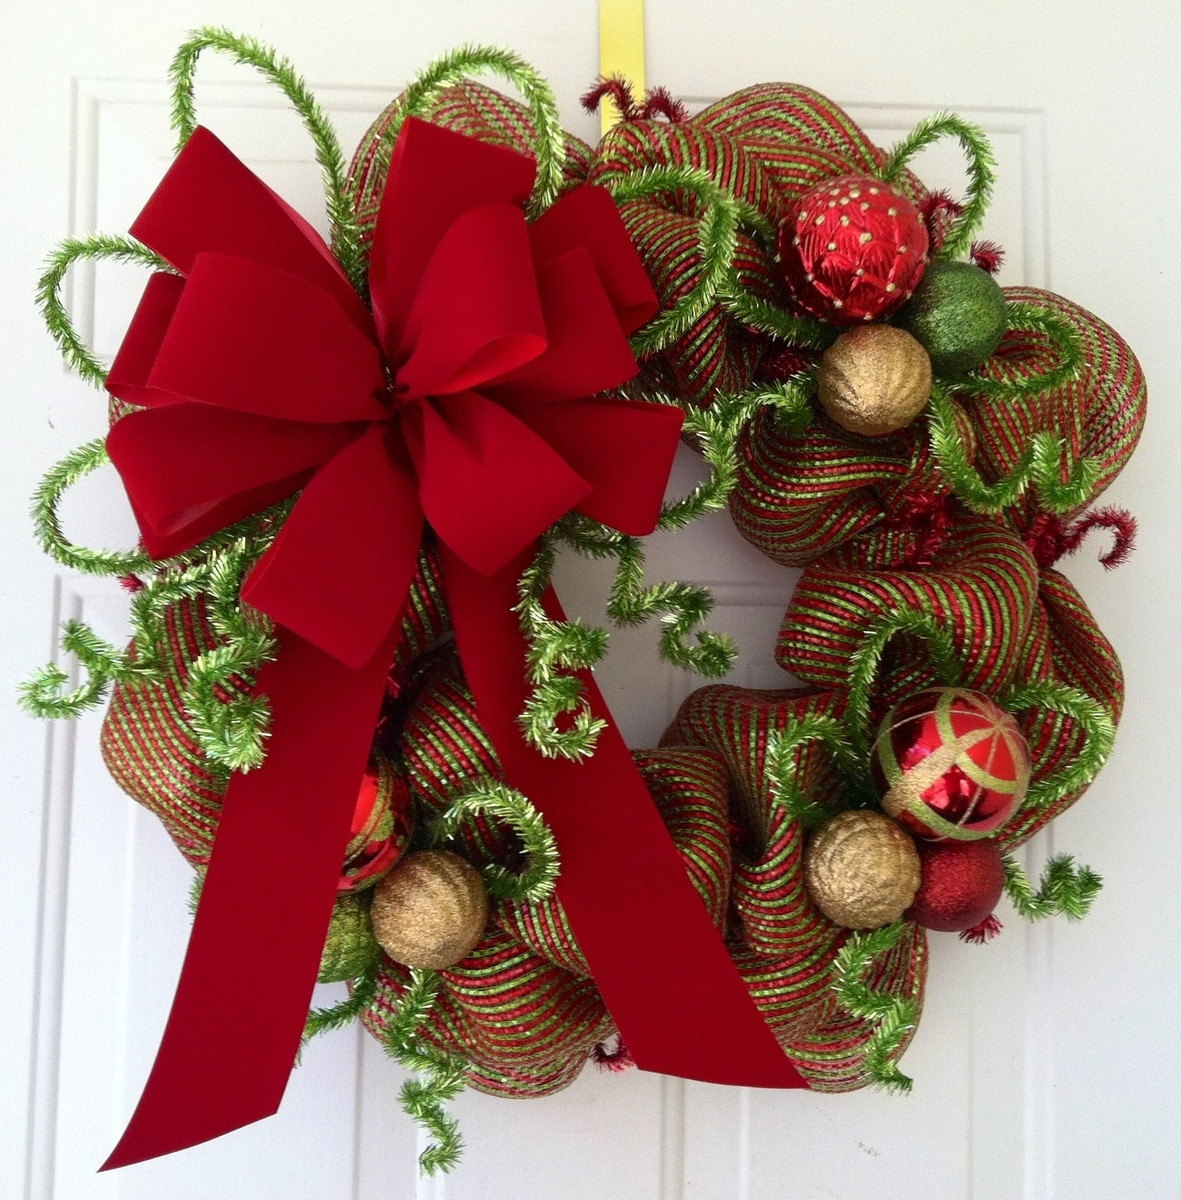 DIY Christmas Wreath Ideas
 Make A Diy Christmas Wreaths Yourself To Celebrate The